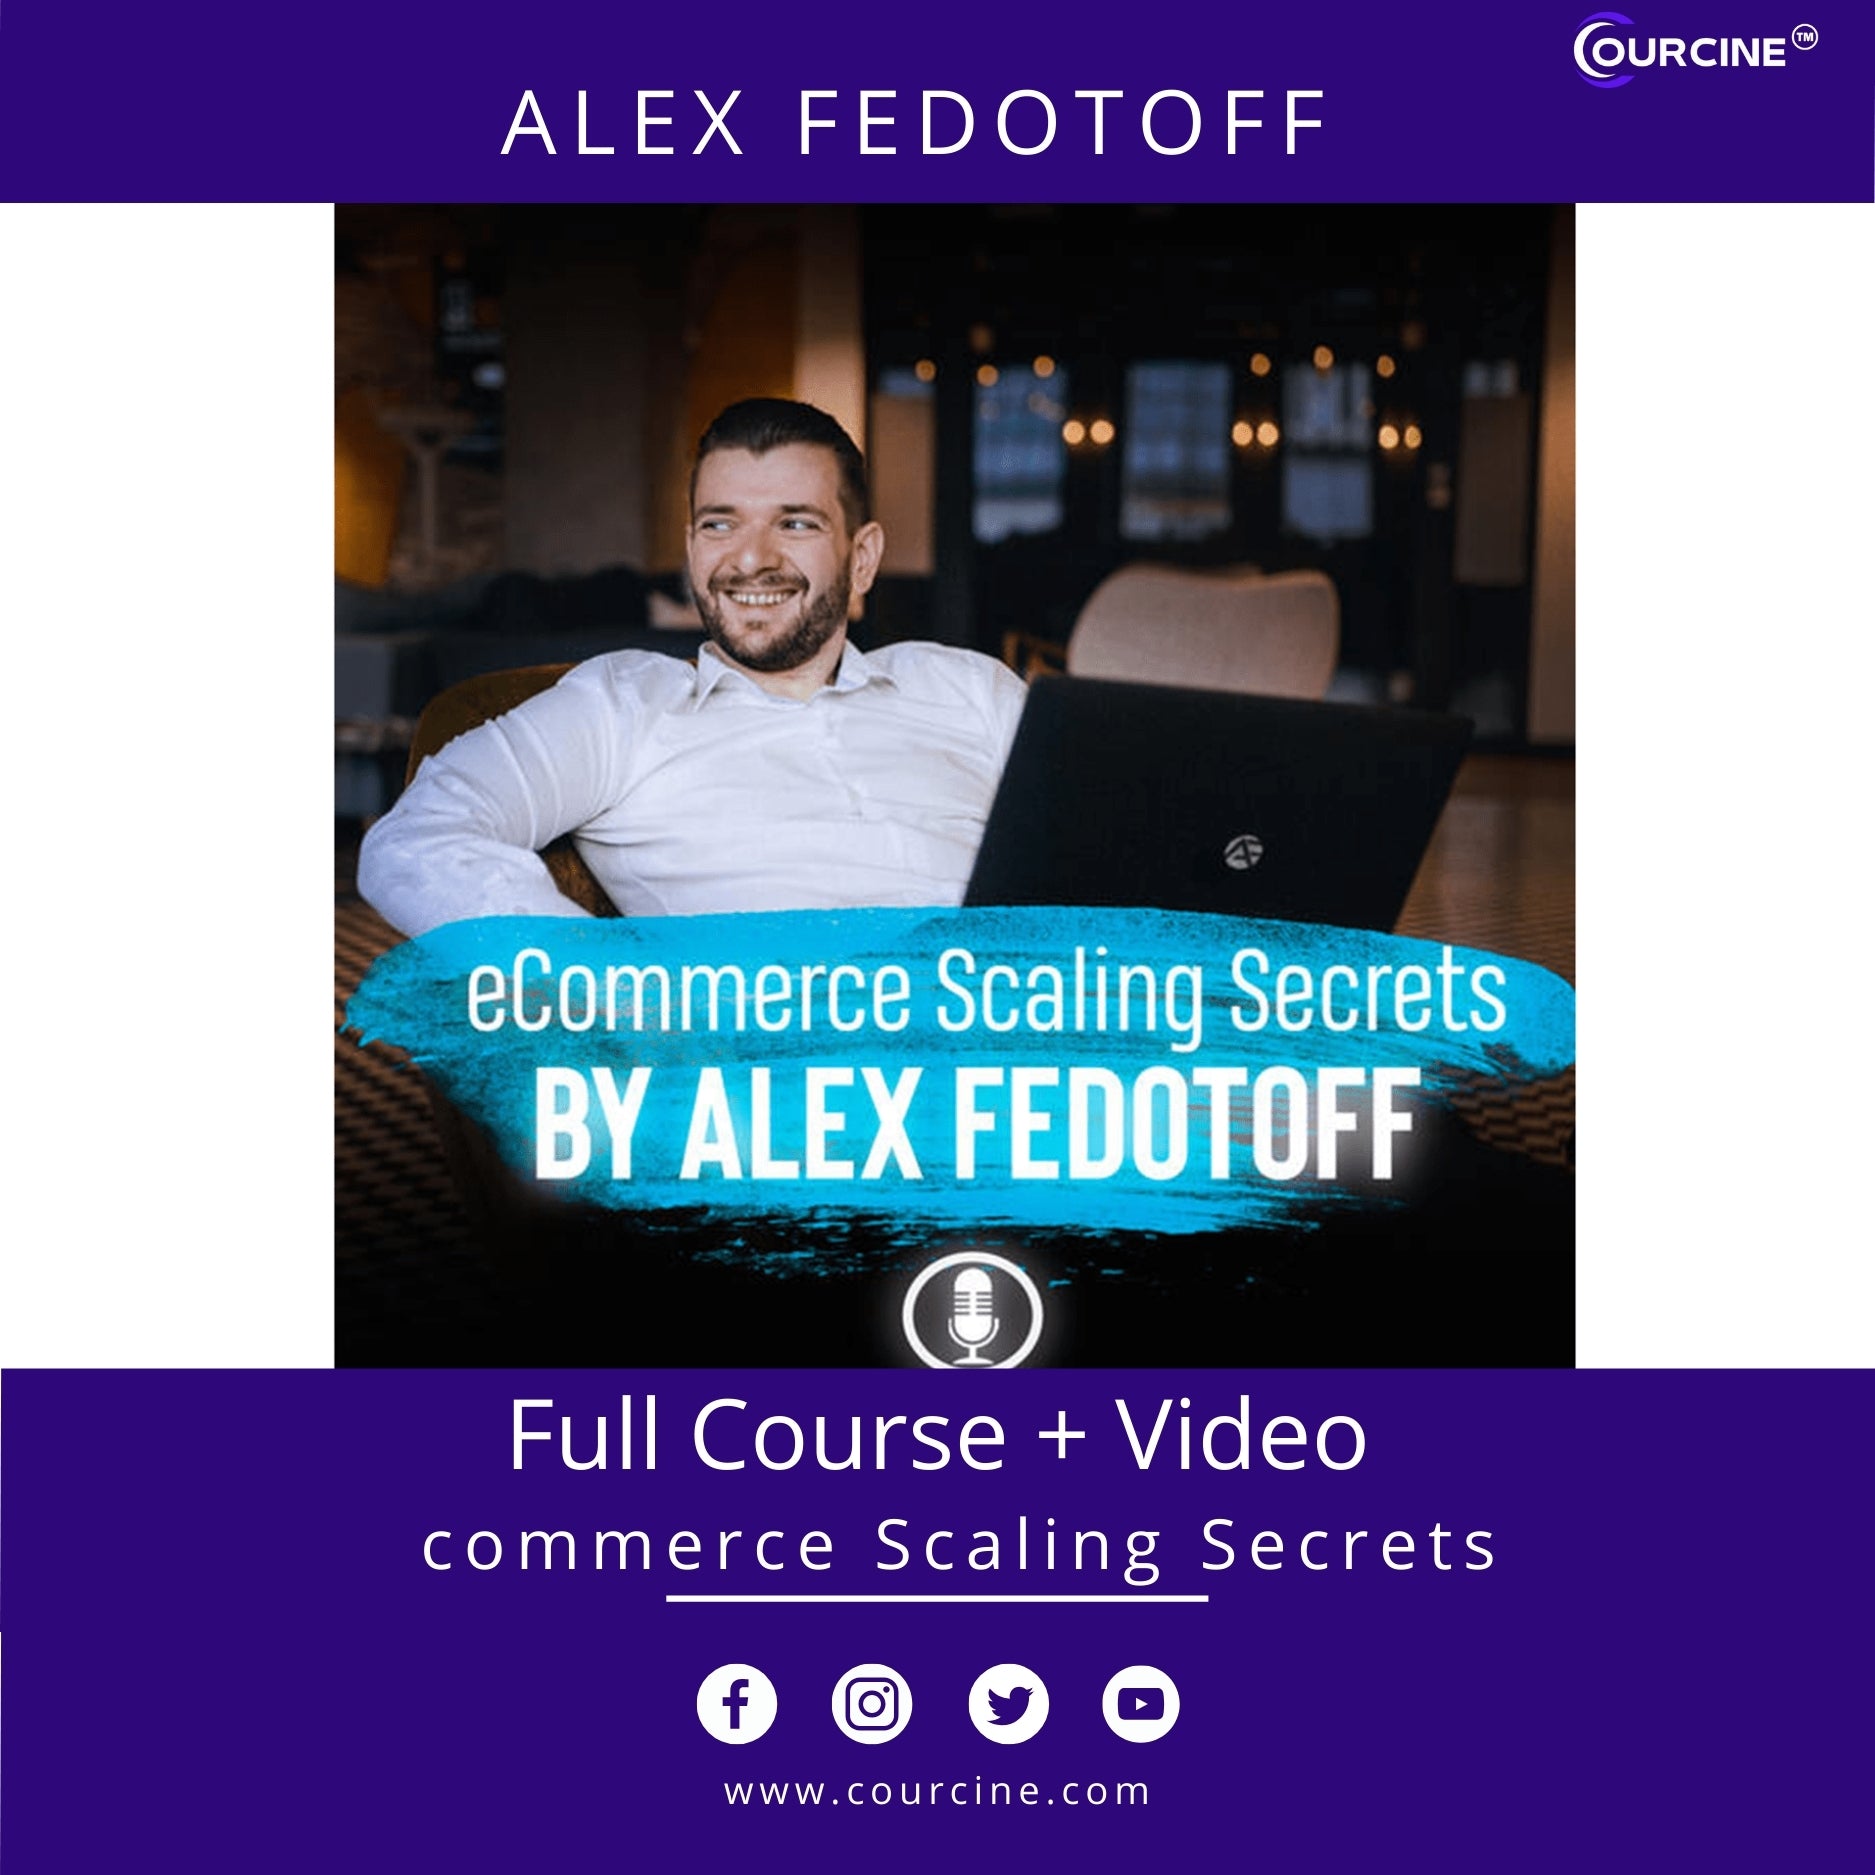 Alex Fedotoff – Ecommerce Scaling Secrets Online Course  Drive link